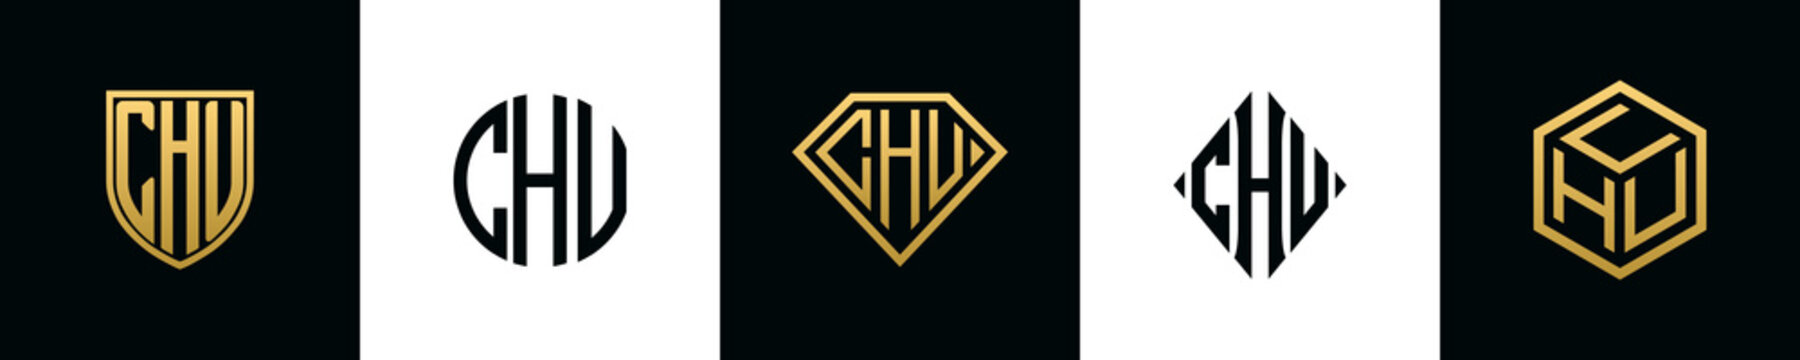 Initial letters CHU logo designs Bundle